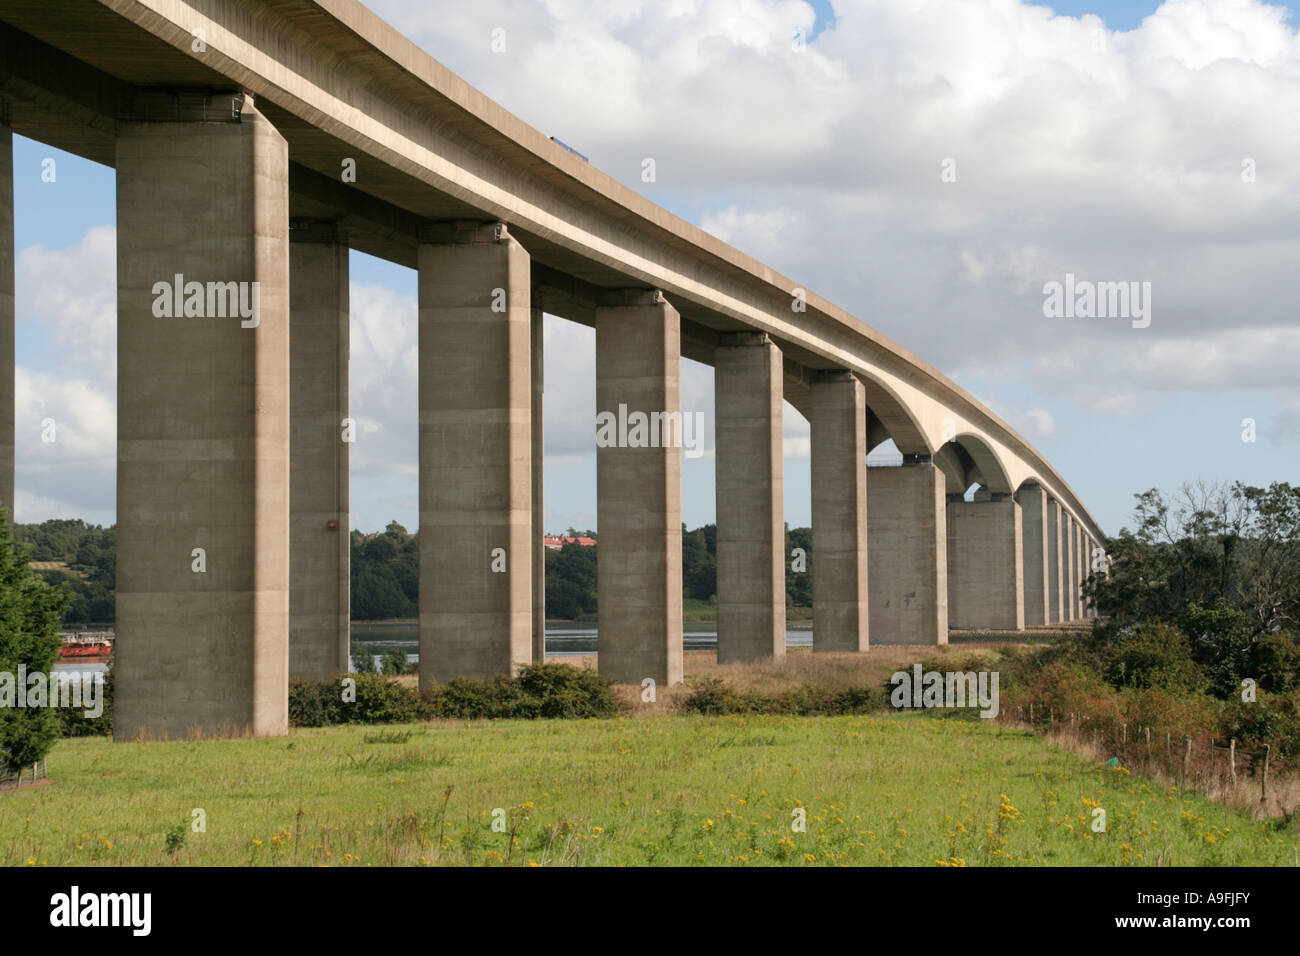 Ipswich orwell bridge multispan concrete viaduct carrying A12 trunk road through suffolk Stock Photo